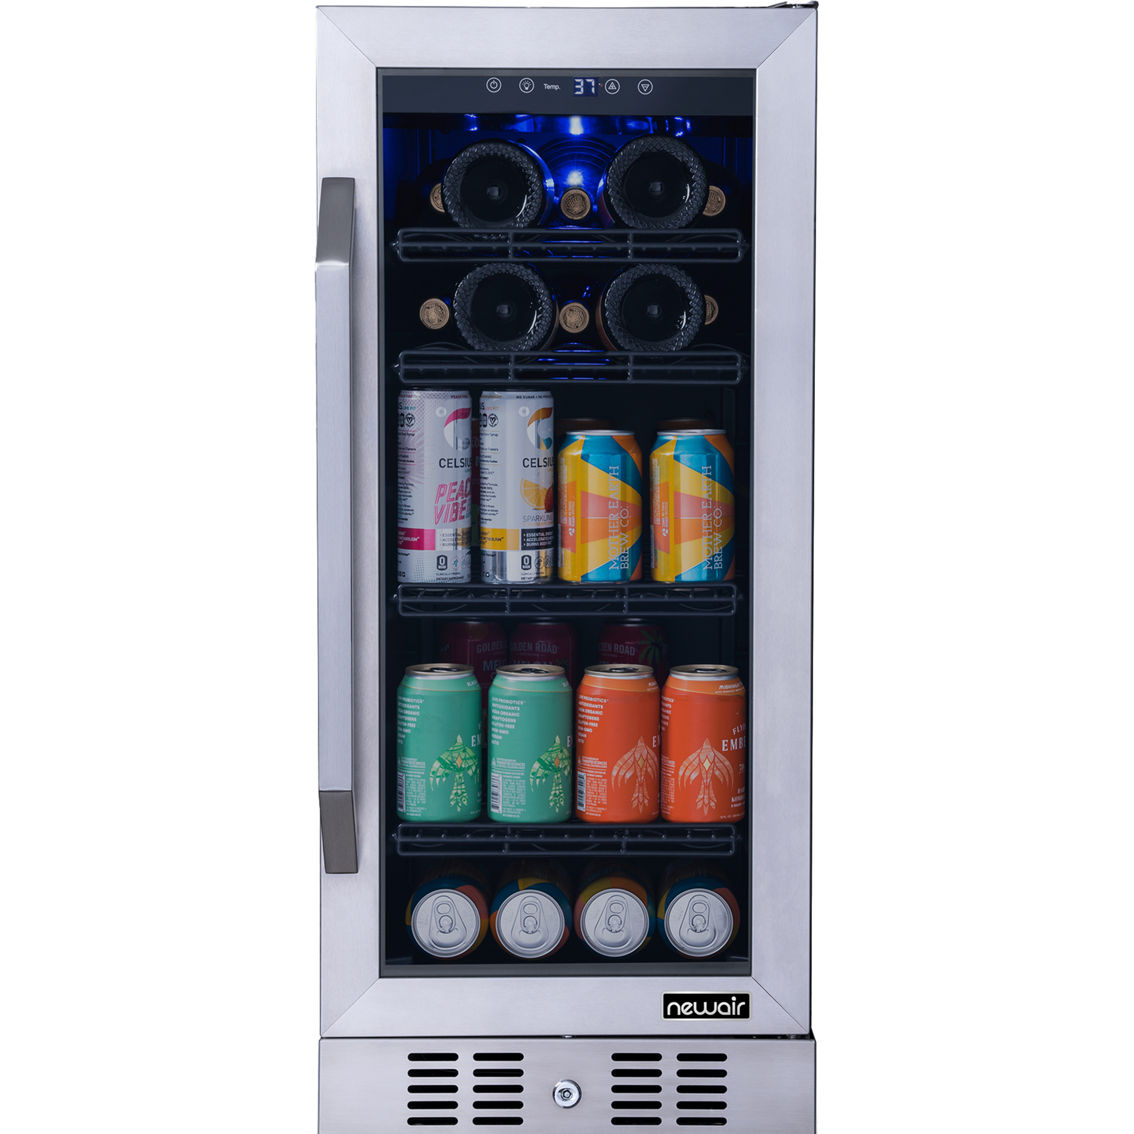 Newair 15 in. FlipShelf Wine and Beverage Refrigerator - Image 2 of 10